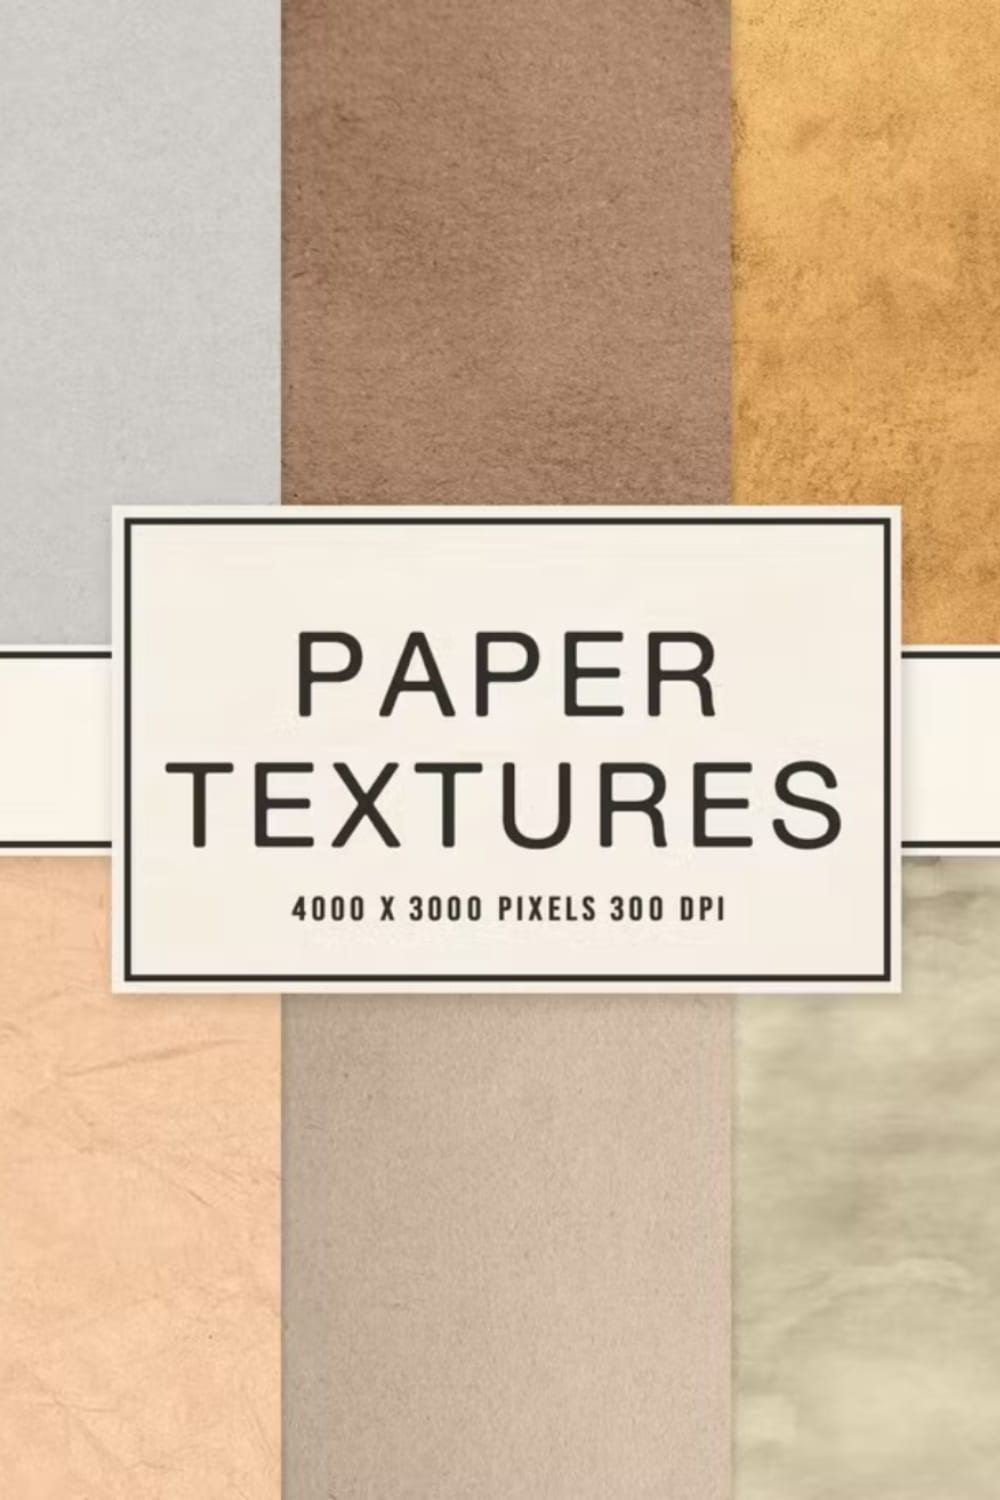 Paper Textures pinterest image.